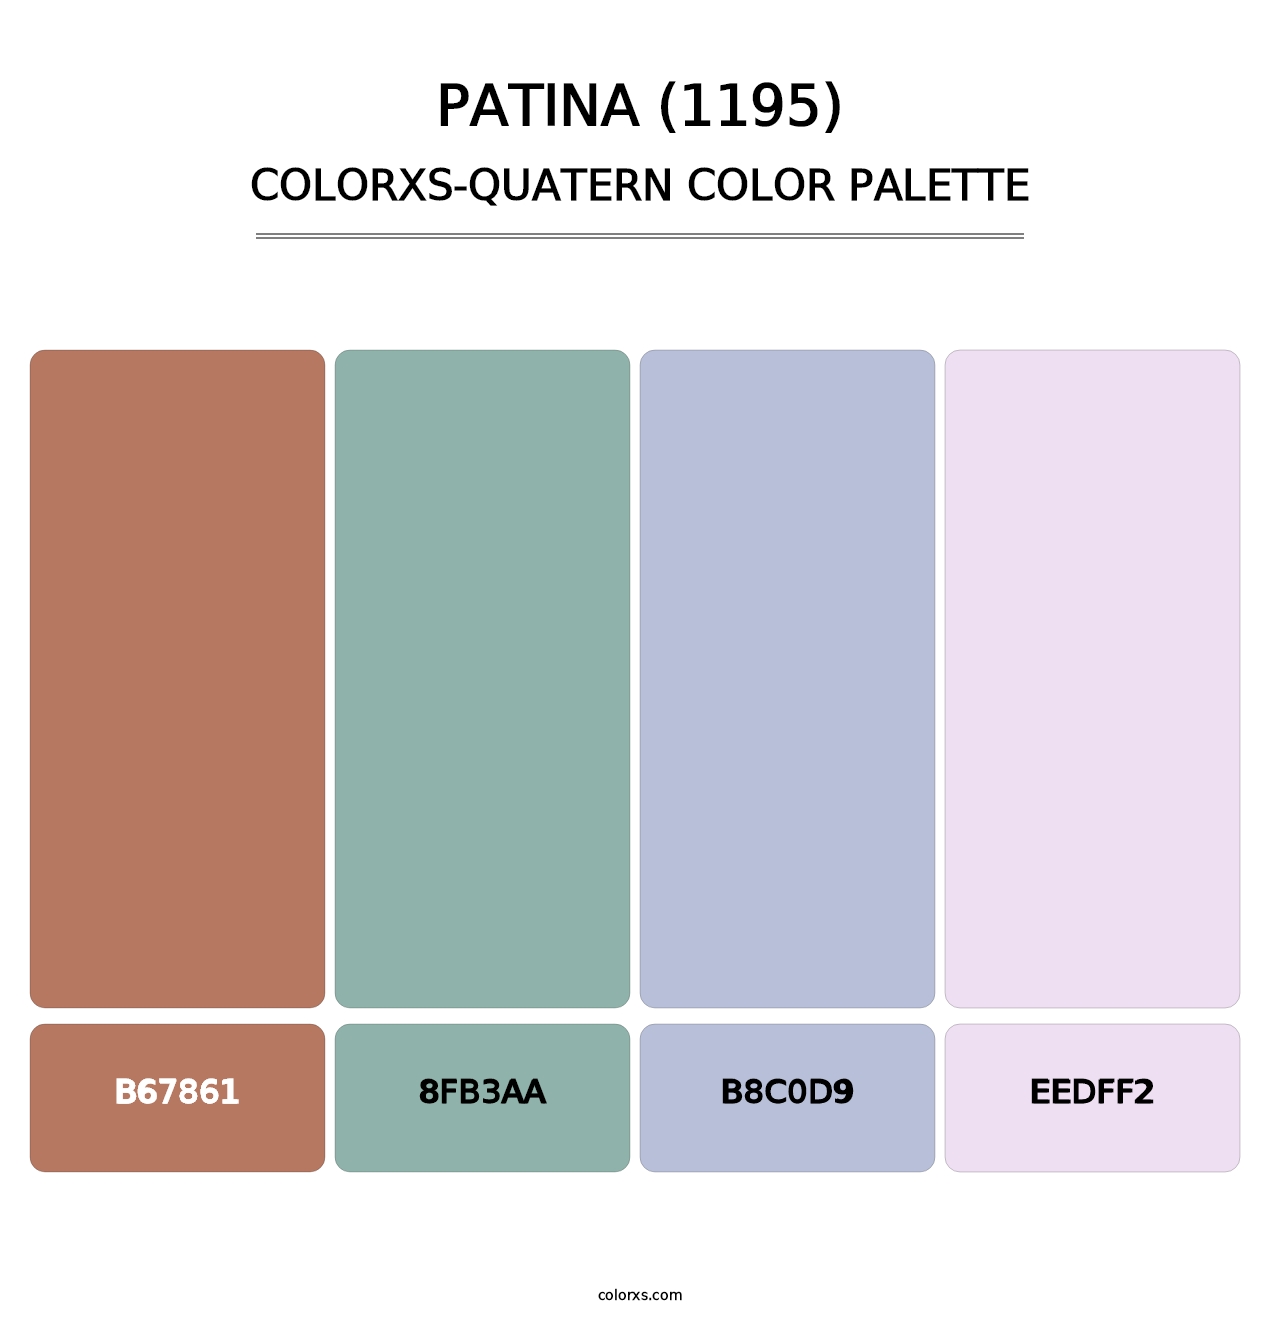 Patina (1195) - Colorxs Quatern Palette